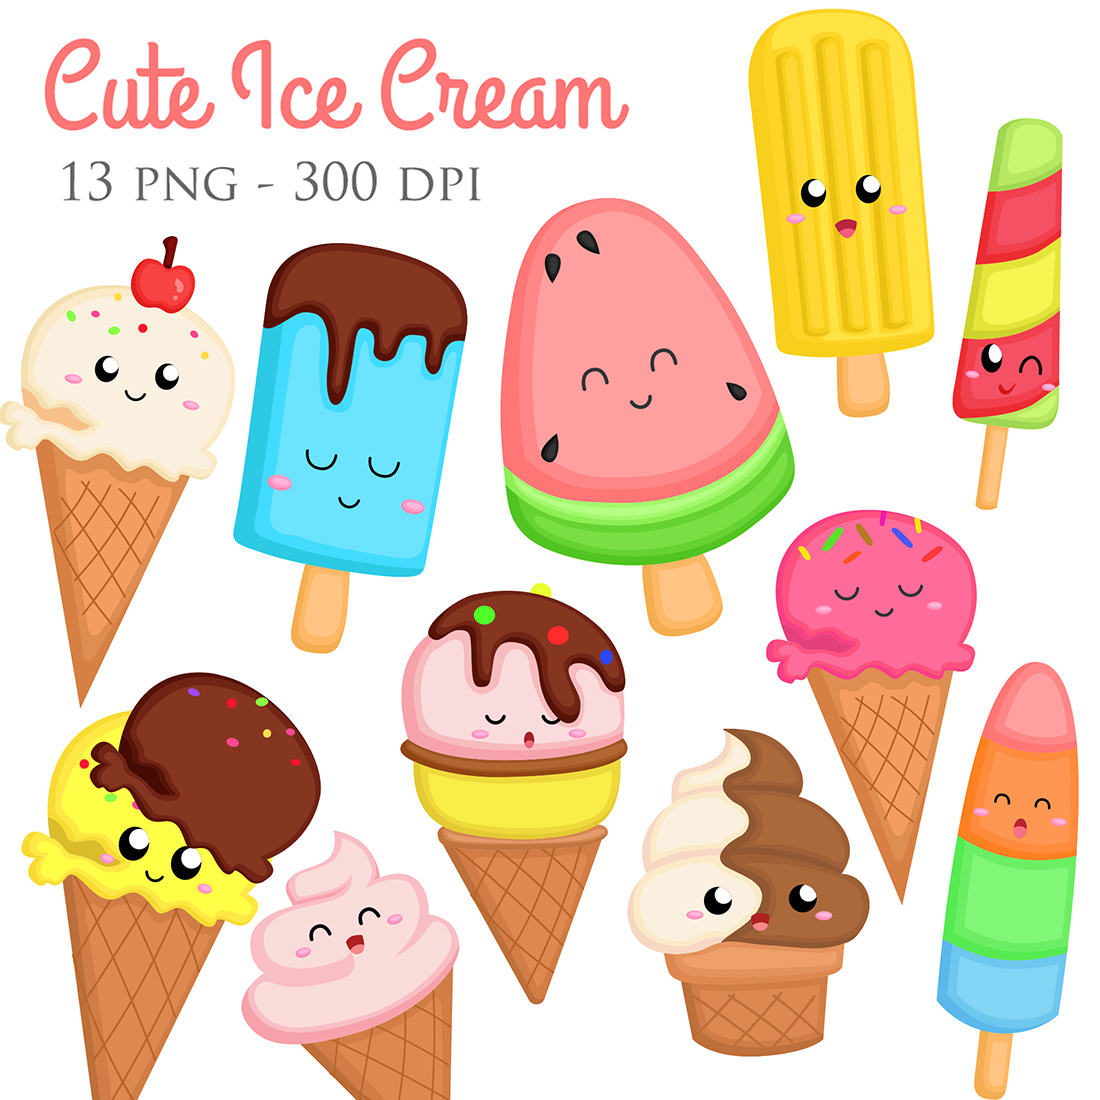 Cute Ice Cream Colorful Flavor Dessert Snack Scoop Cone Stick Fruit Fresh Illustration Vector Clipart Cartoon cover image.